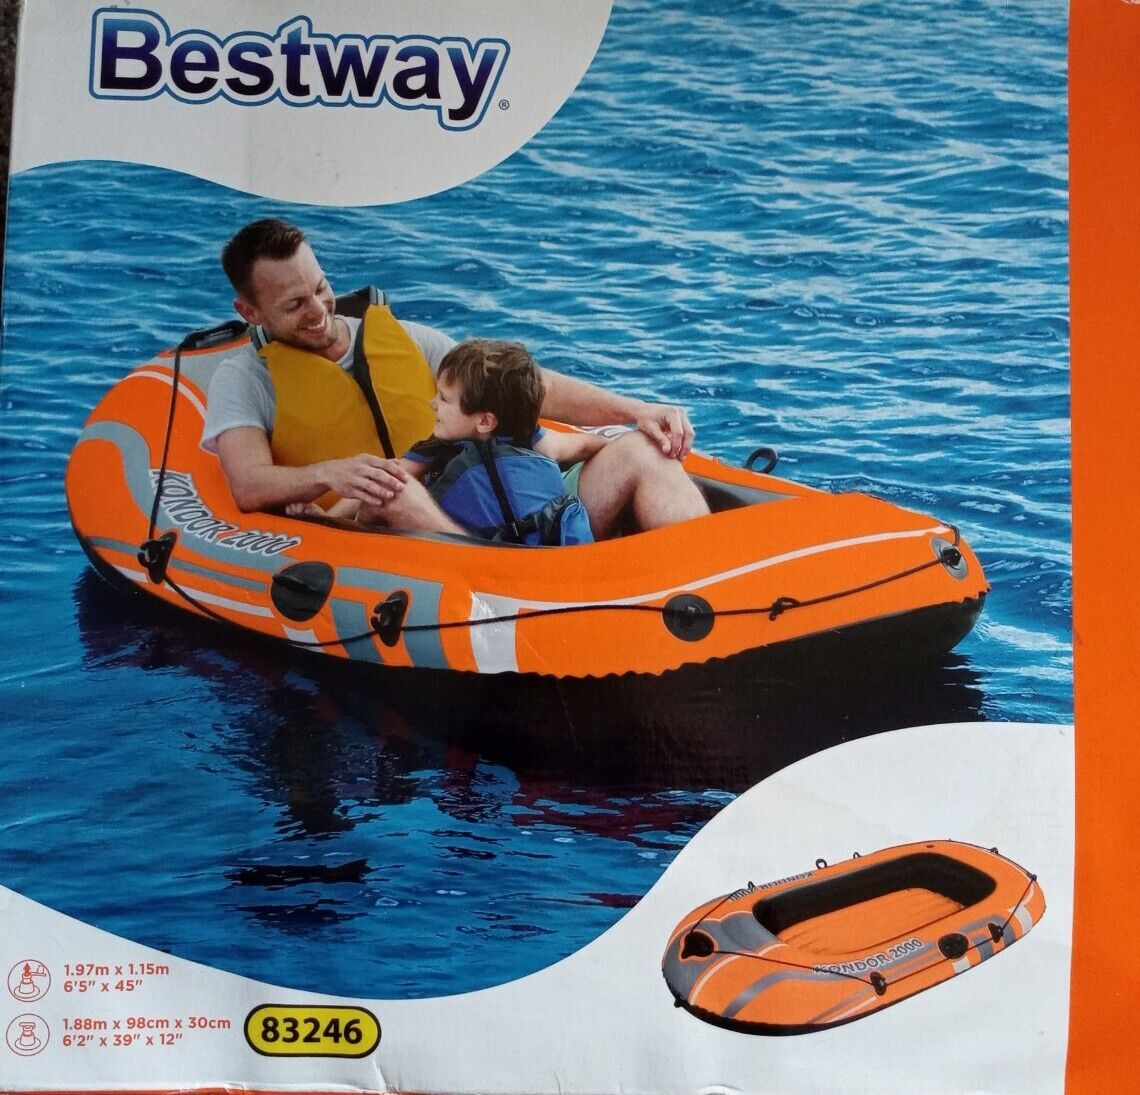 Bestway Inflatable Kondor 2000 Boat 2 Person Rubber Dinghy Lake Raft 